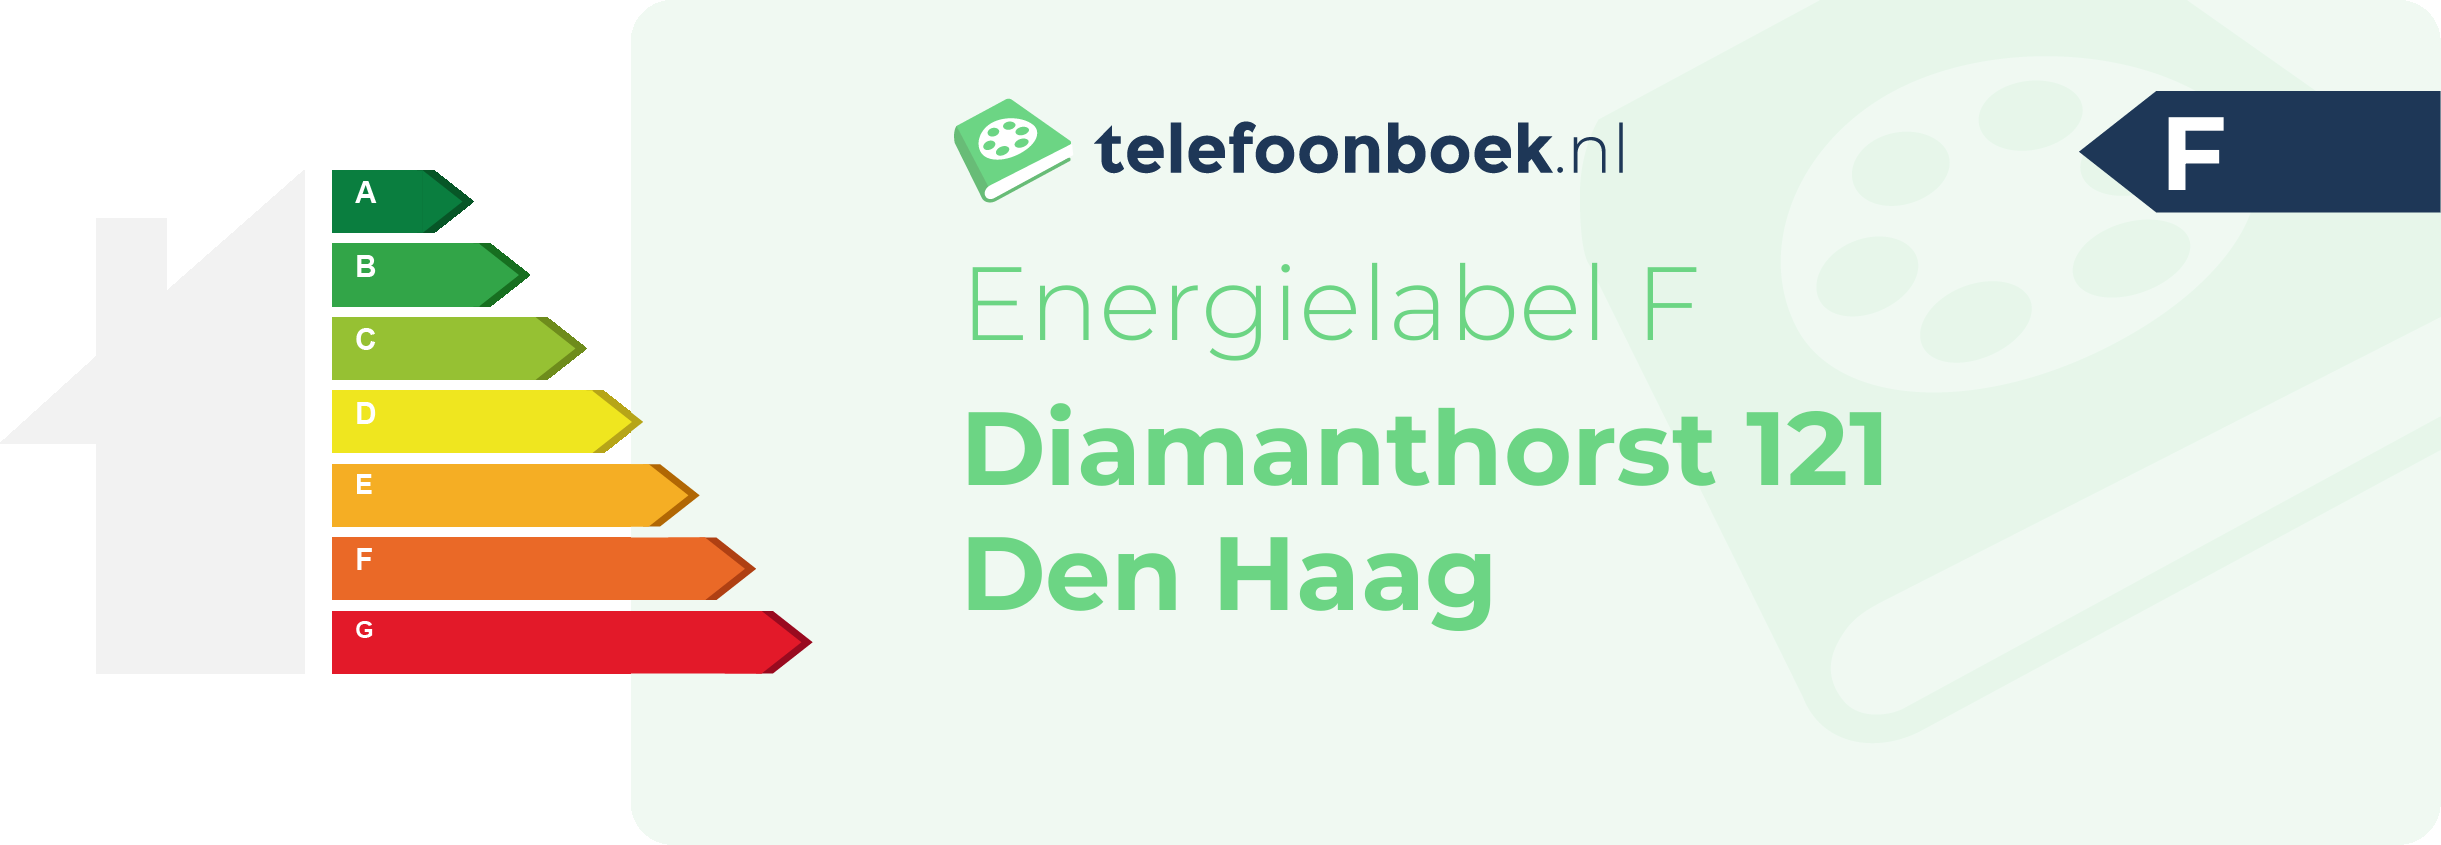 Energielabel Diamanthorst 121 Den Haag